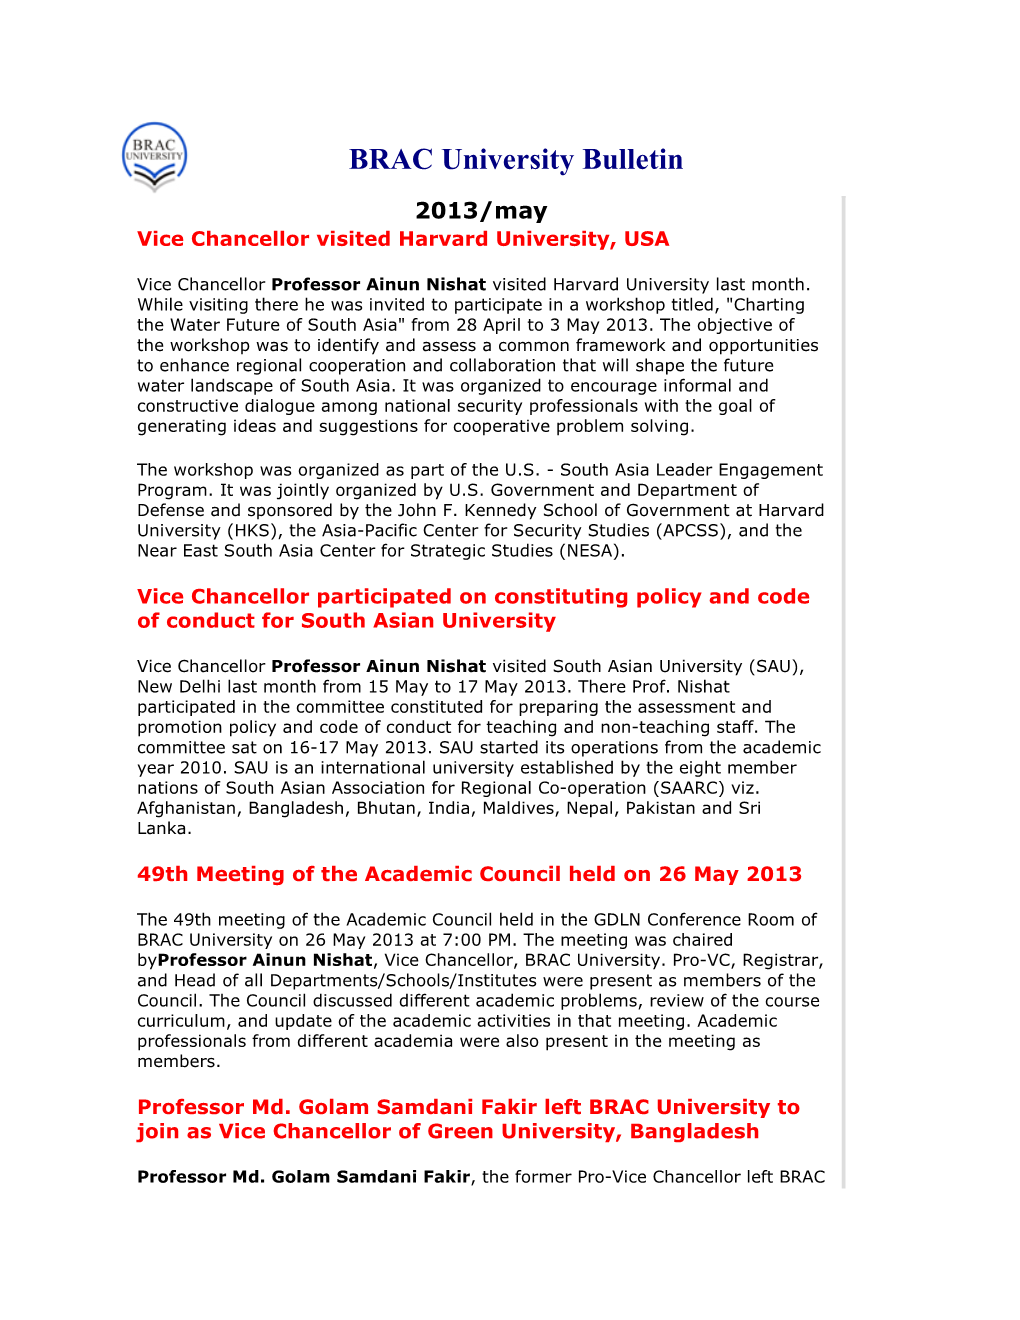 BRAC University Bulletin May 2013.Pdf